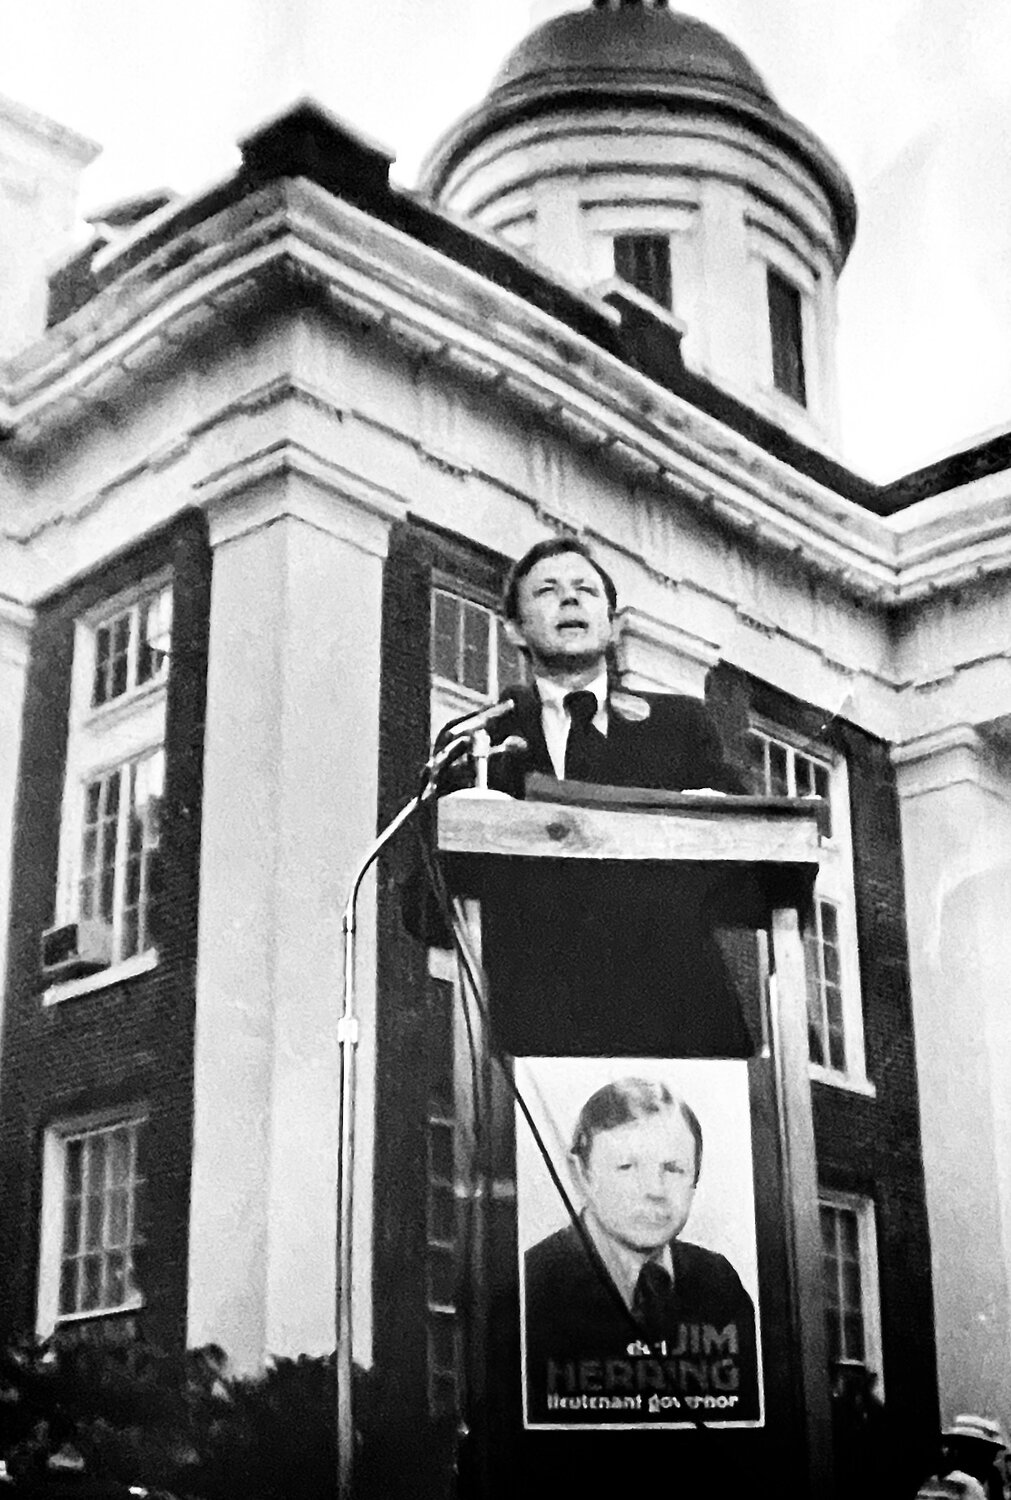 Jim Herring campaigning for Lt. Gov. in Canton in 1976.